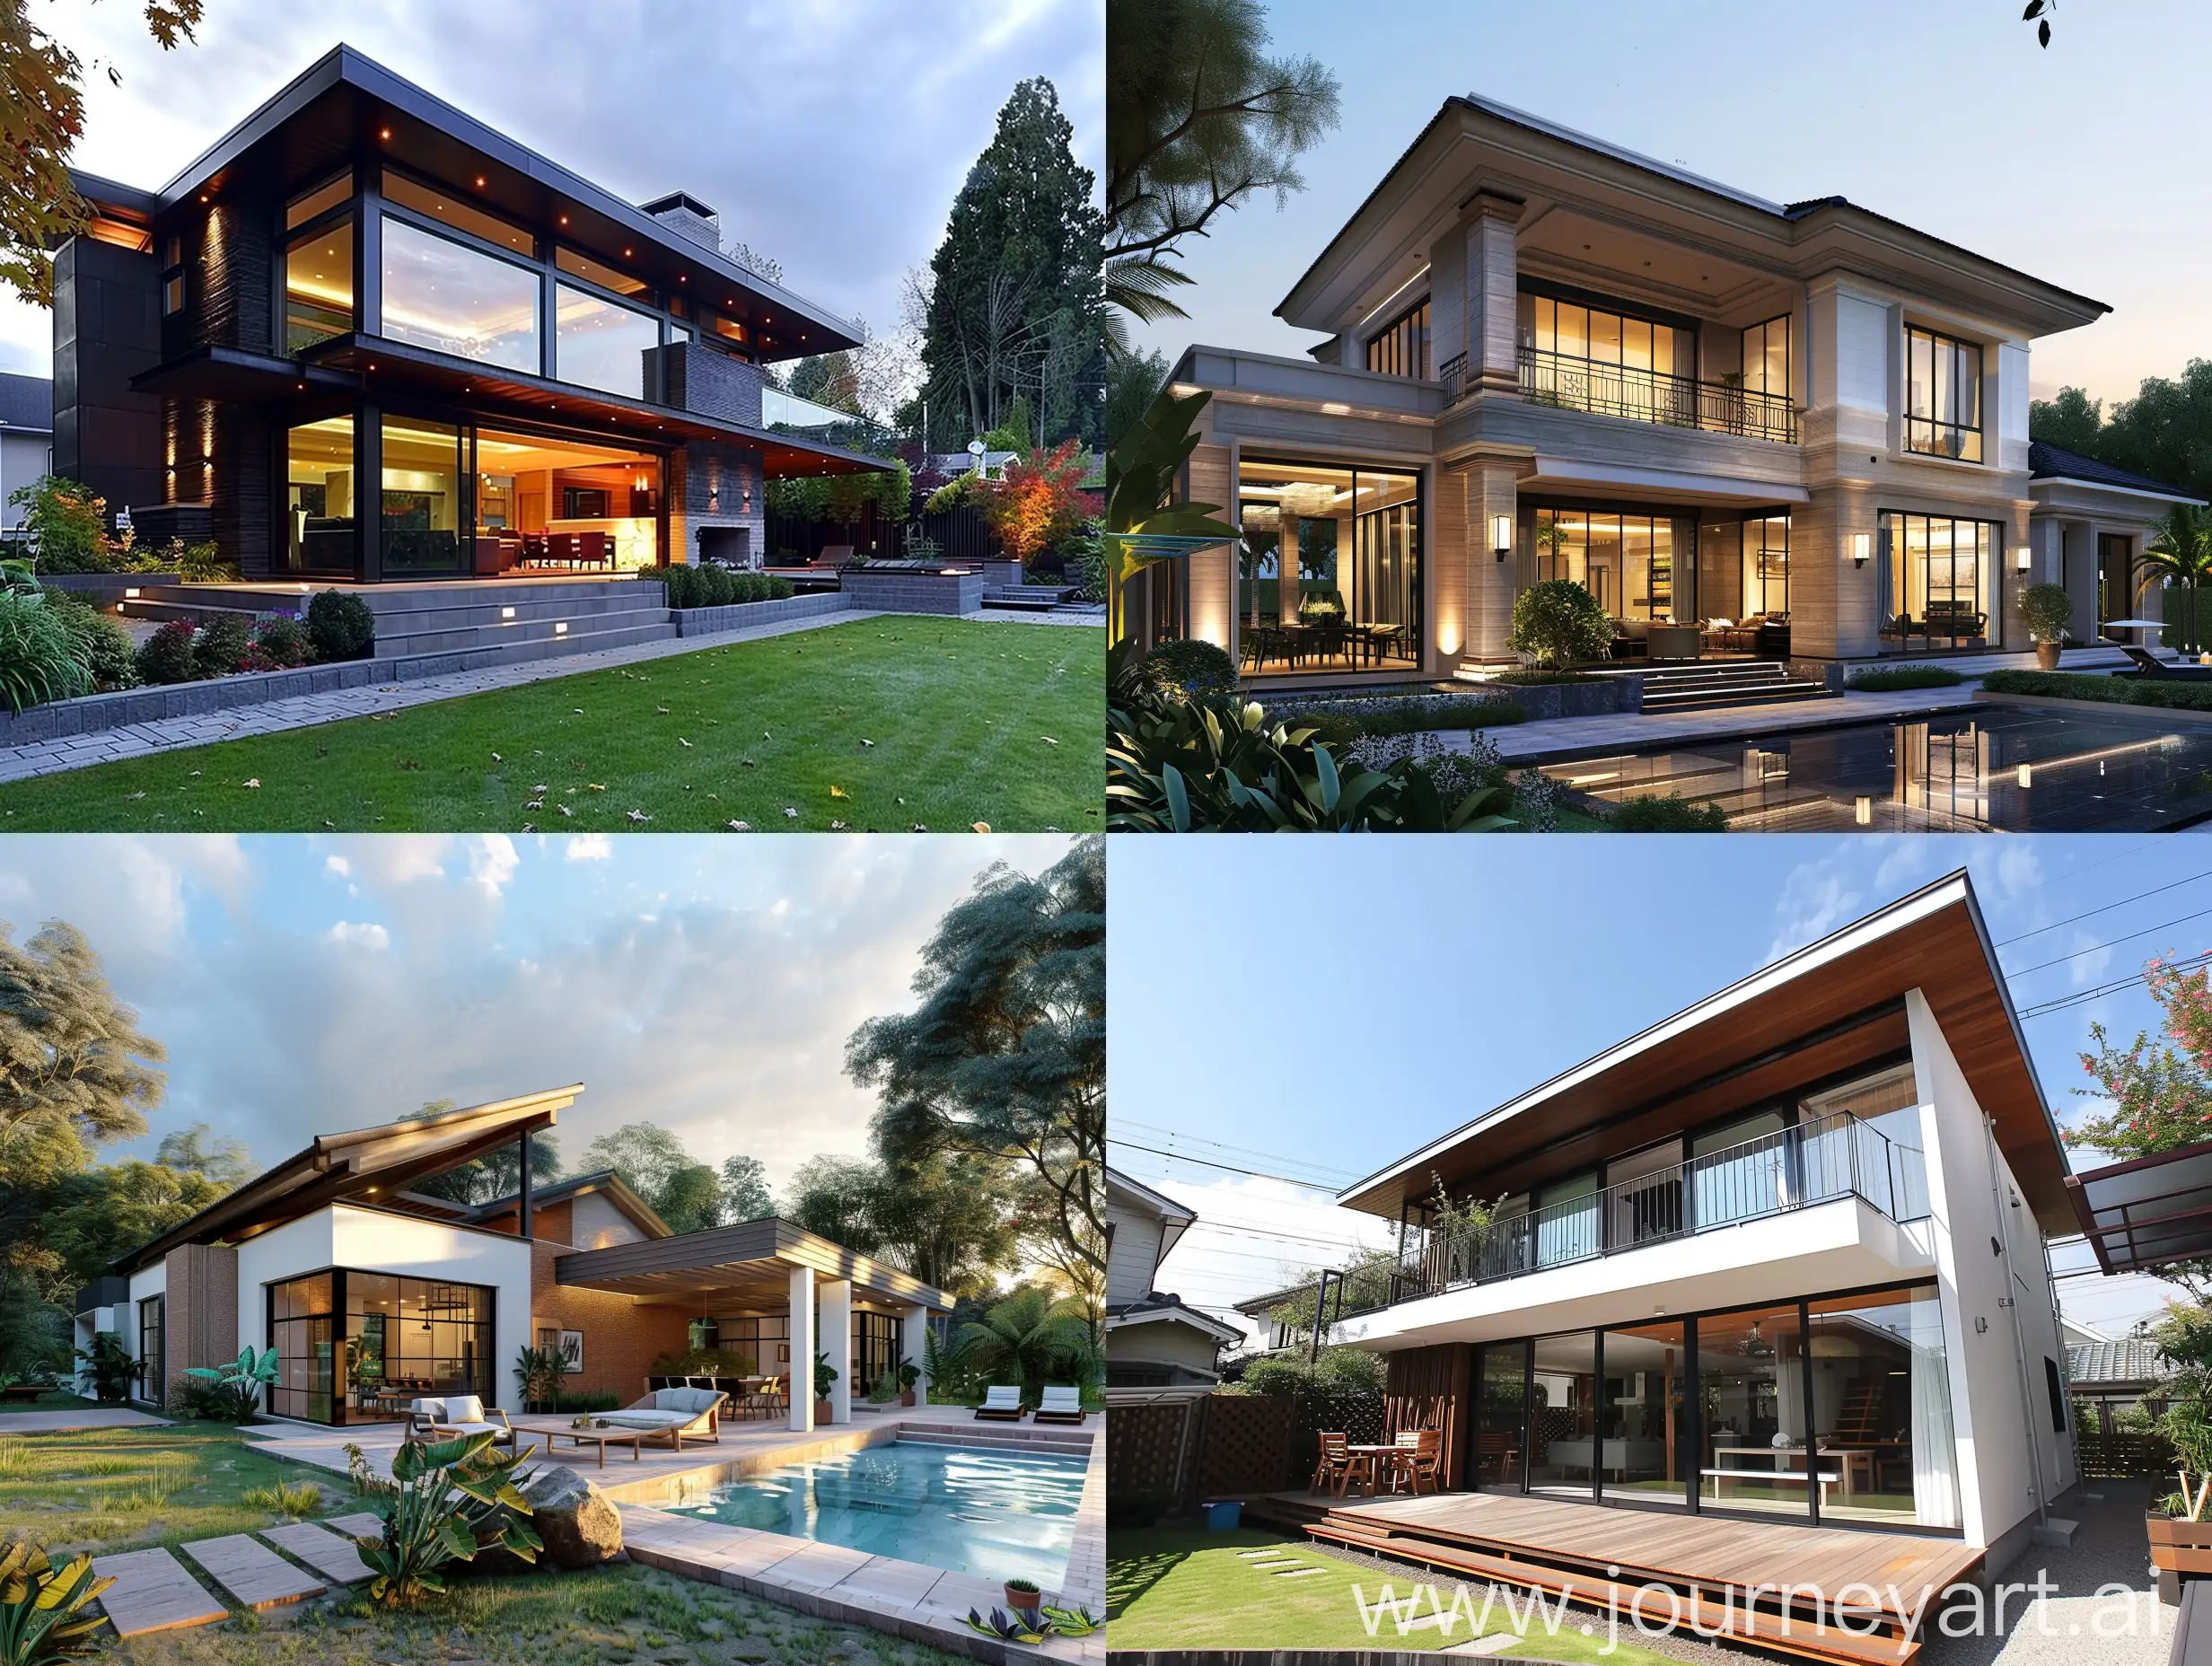 Modern-Stylish-House-with-Angular-Architecture